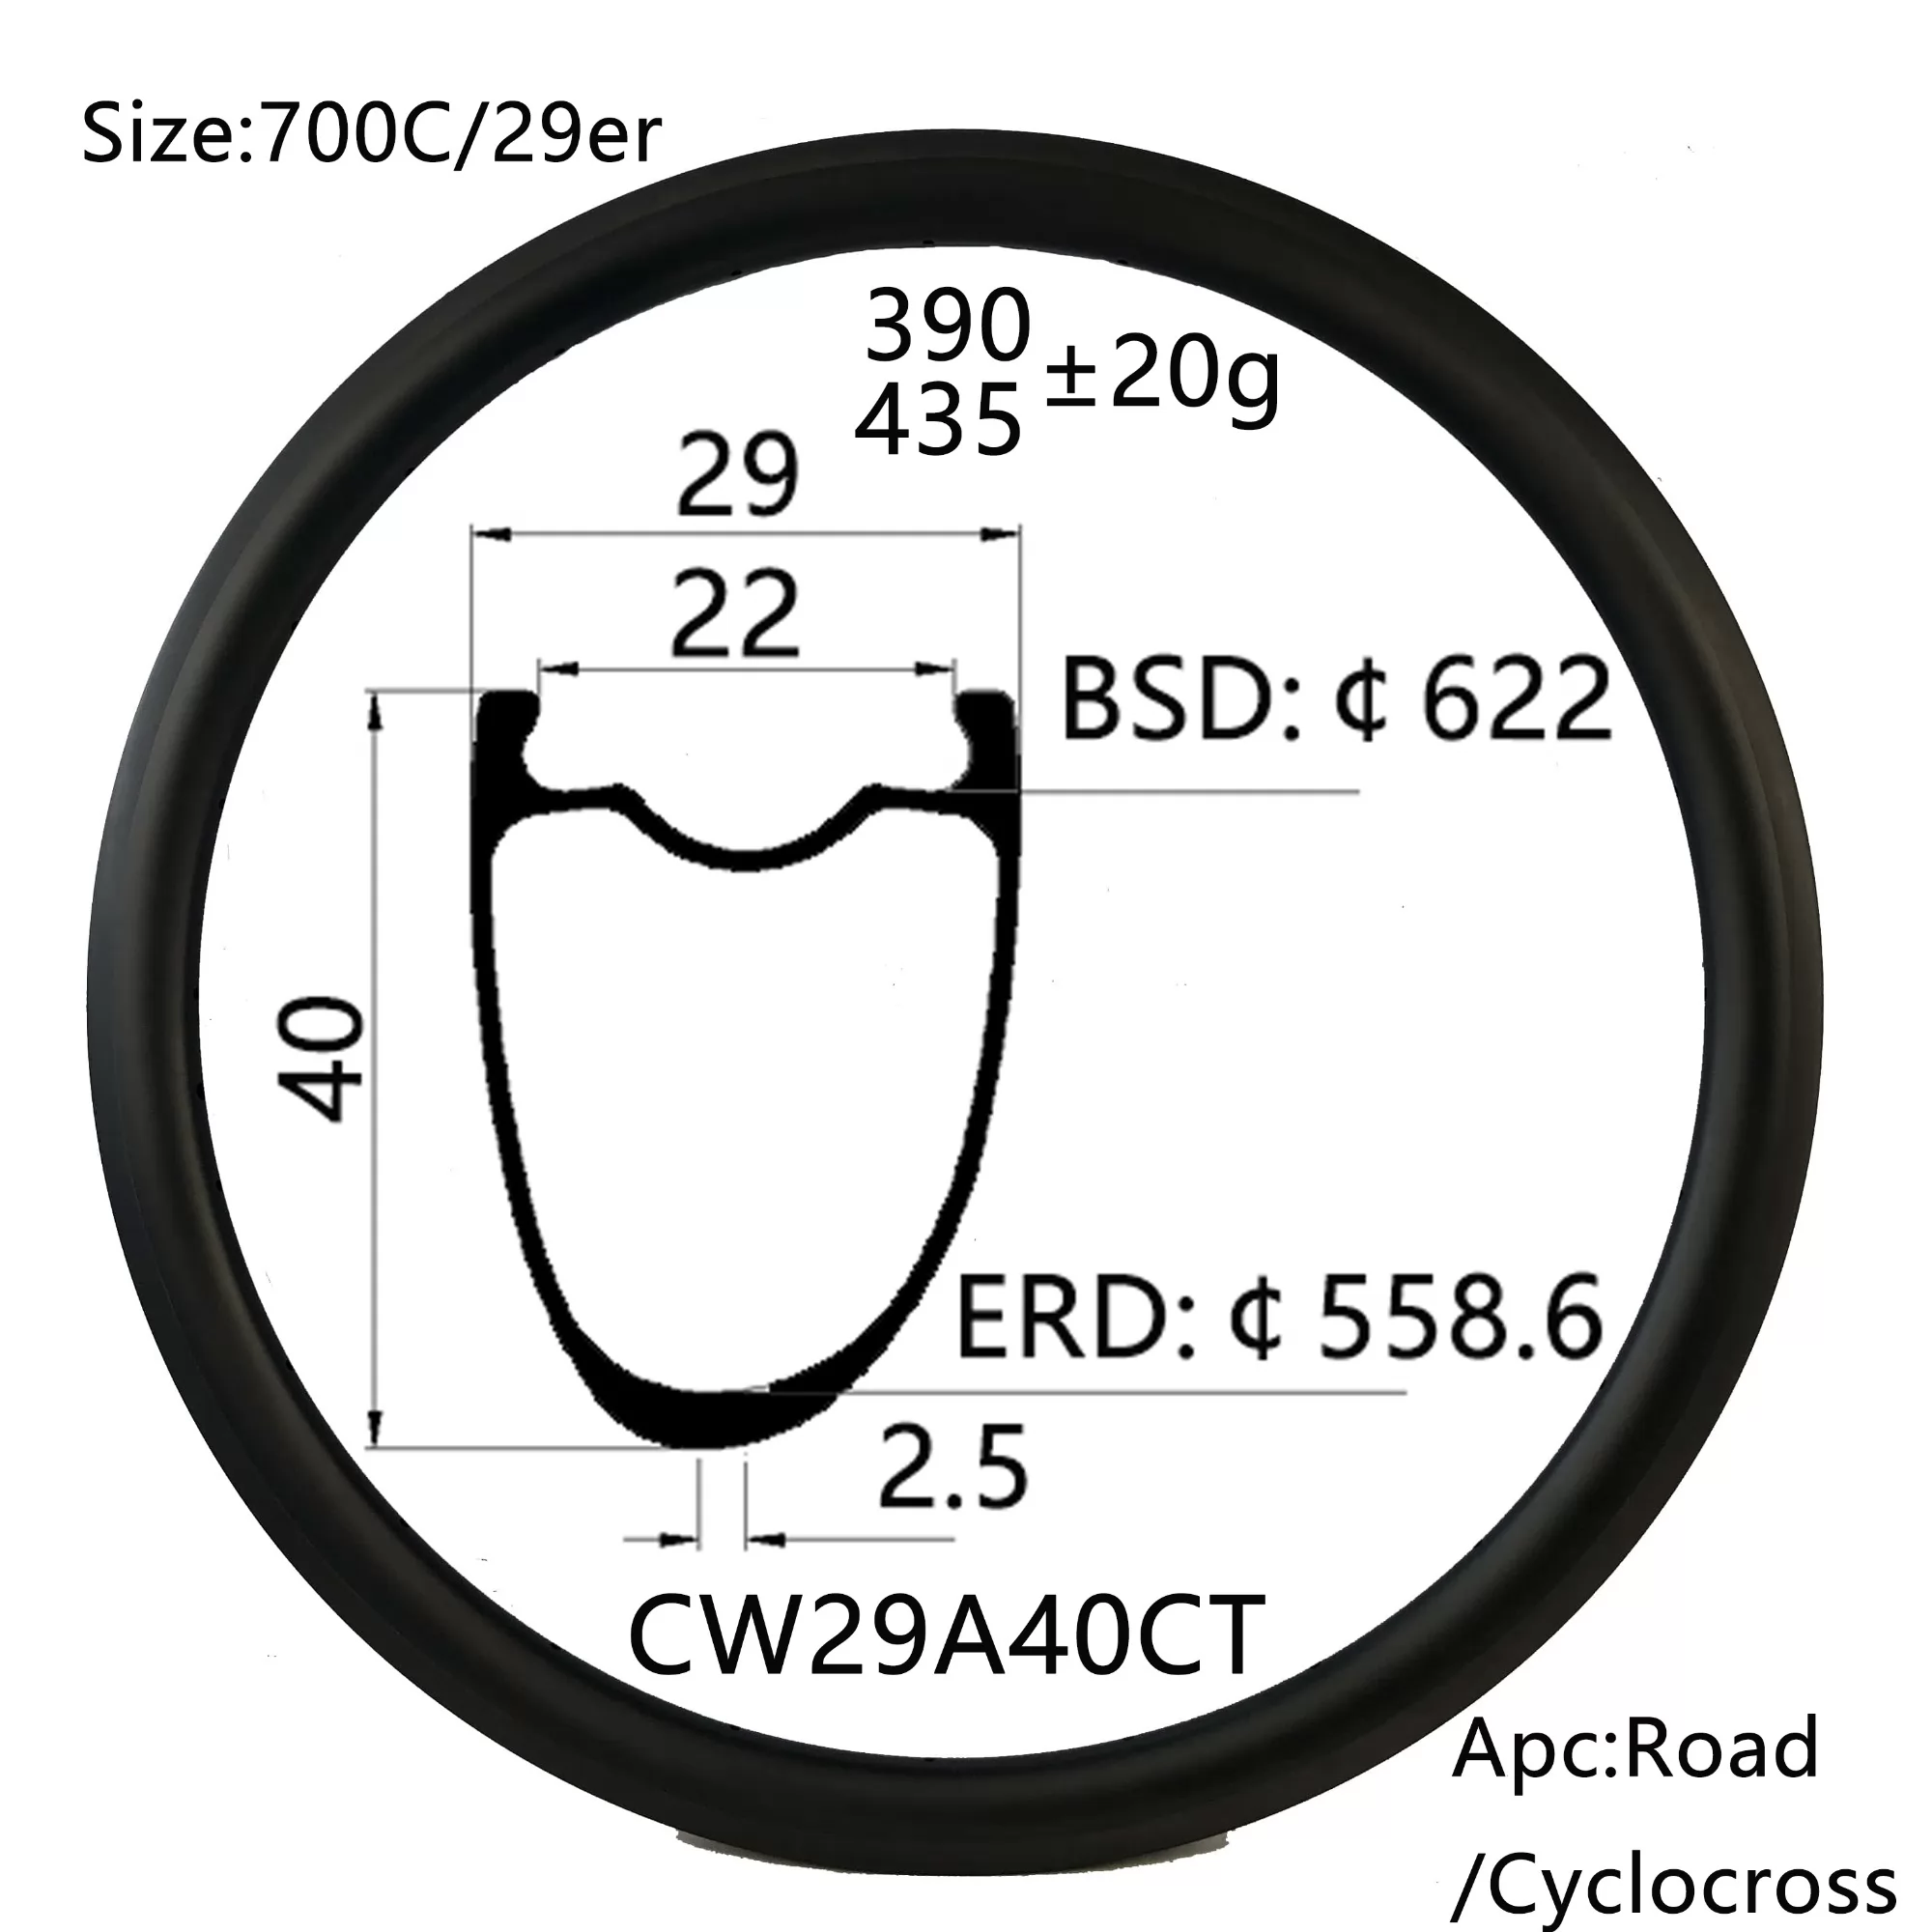 |CW29A40CT| 700C/29er gravel bike carbon rims asymmetry 2.5mm 29X40mm disc brake/V brake available 2022 new arrival hot sale